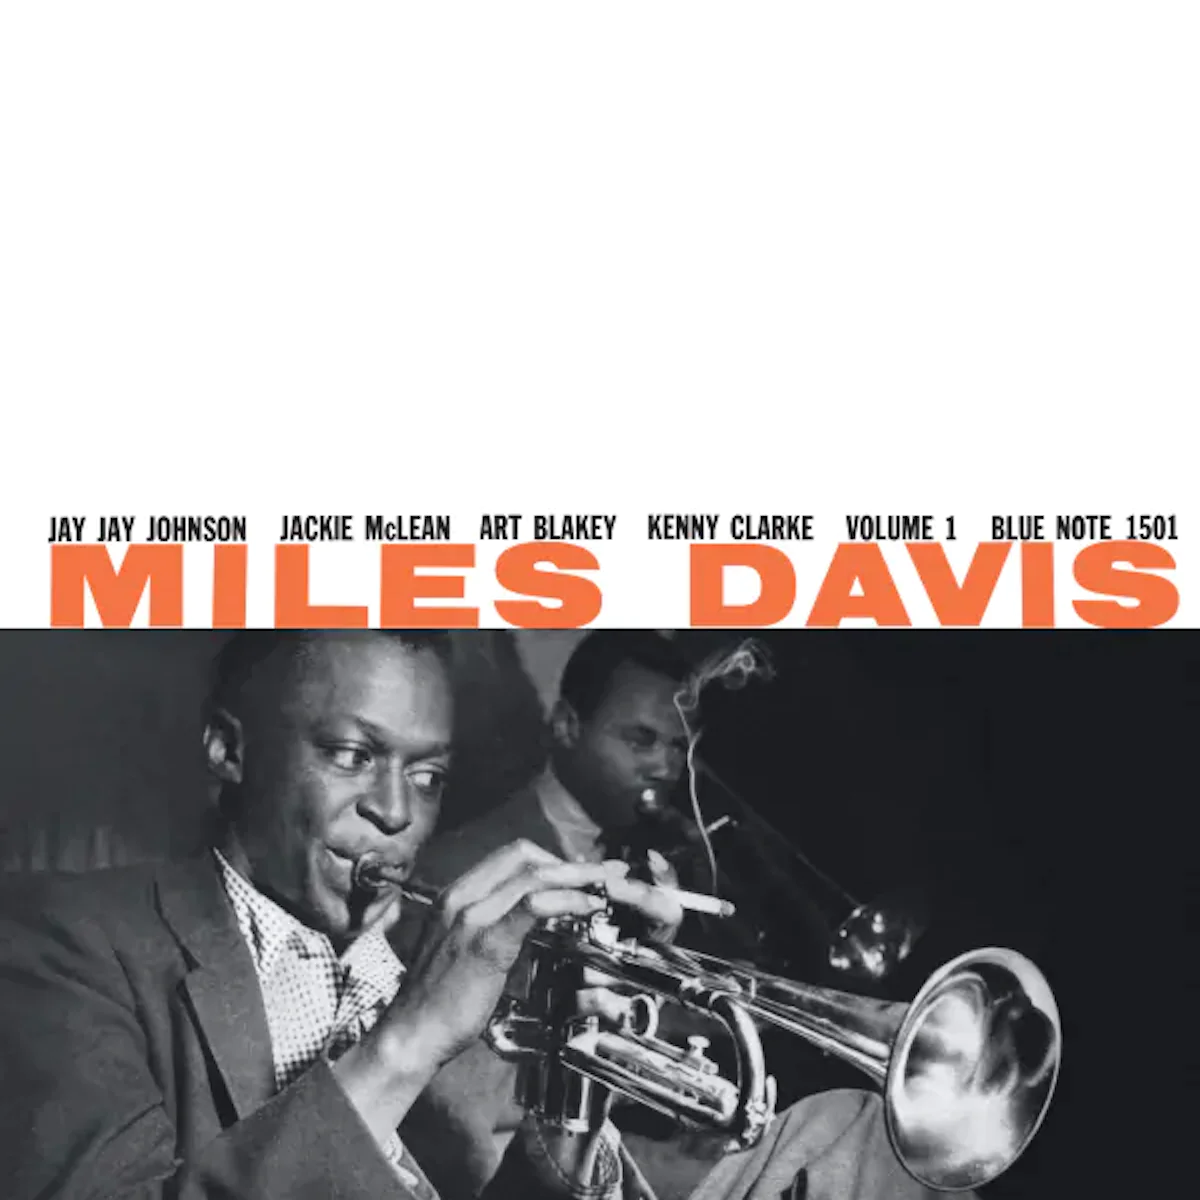 MILES DAVIS - VOLUME 1 (BLUE NOTE CLASSIC SERIES)